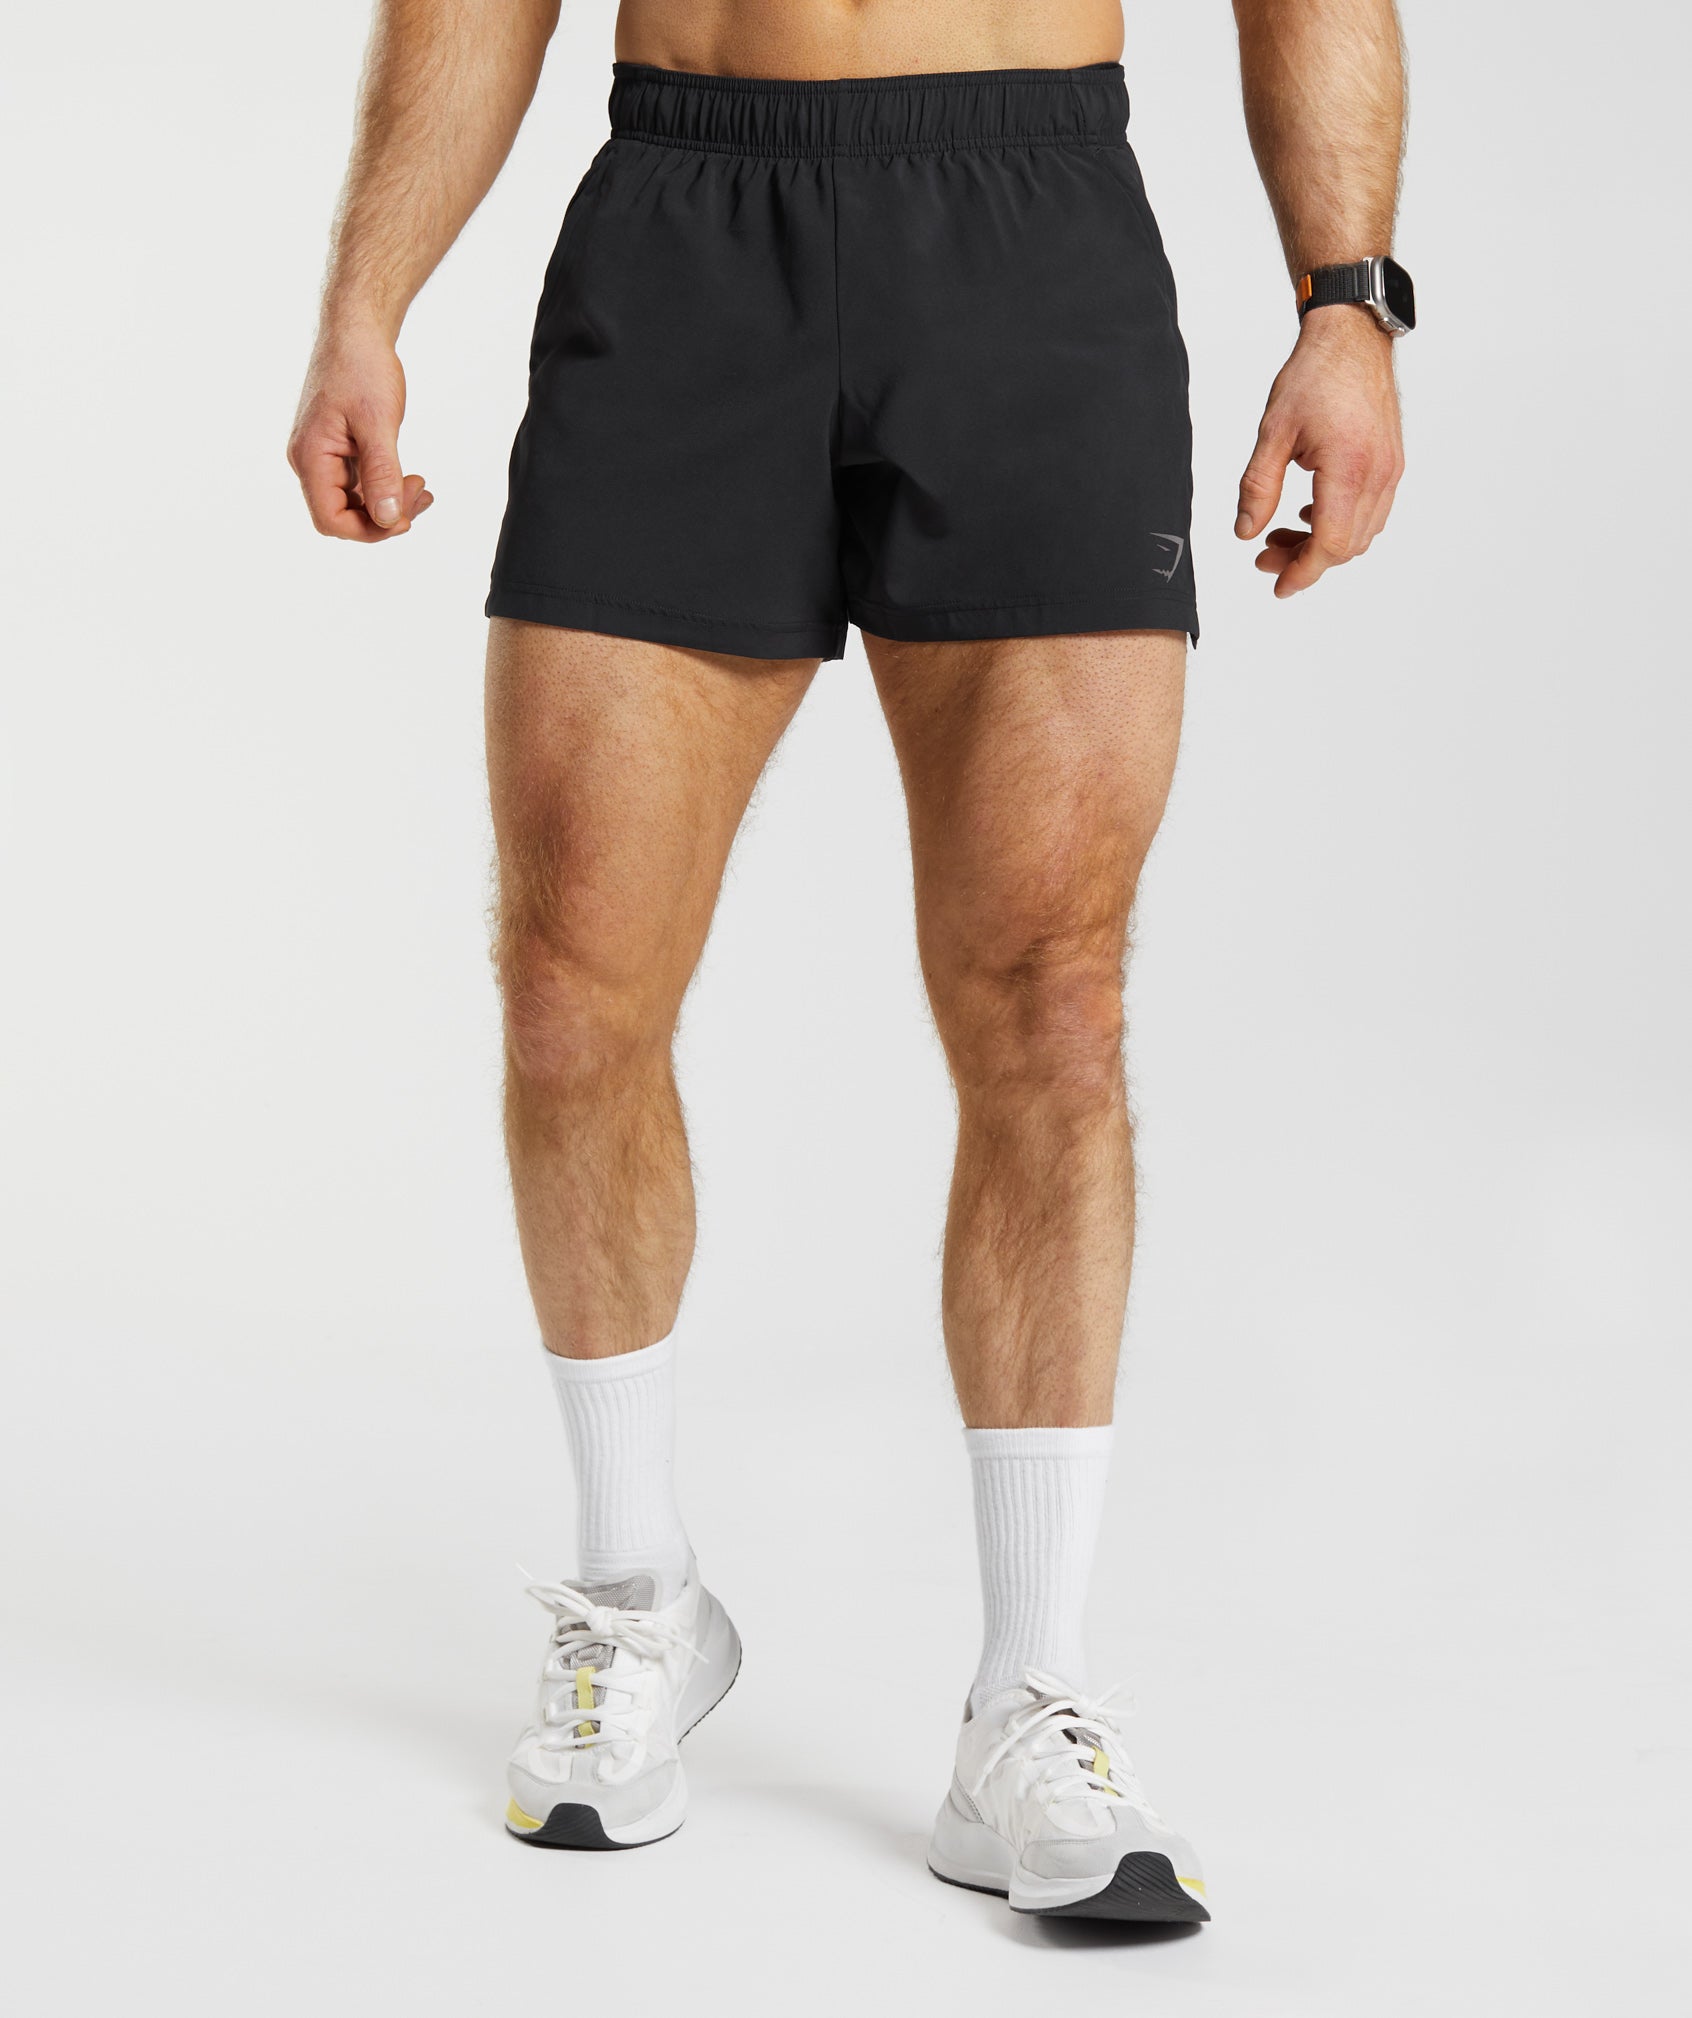 Men's Pocket Shorts & Gym Shorts with Pockets – Gymshark